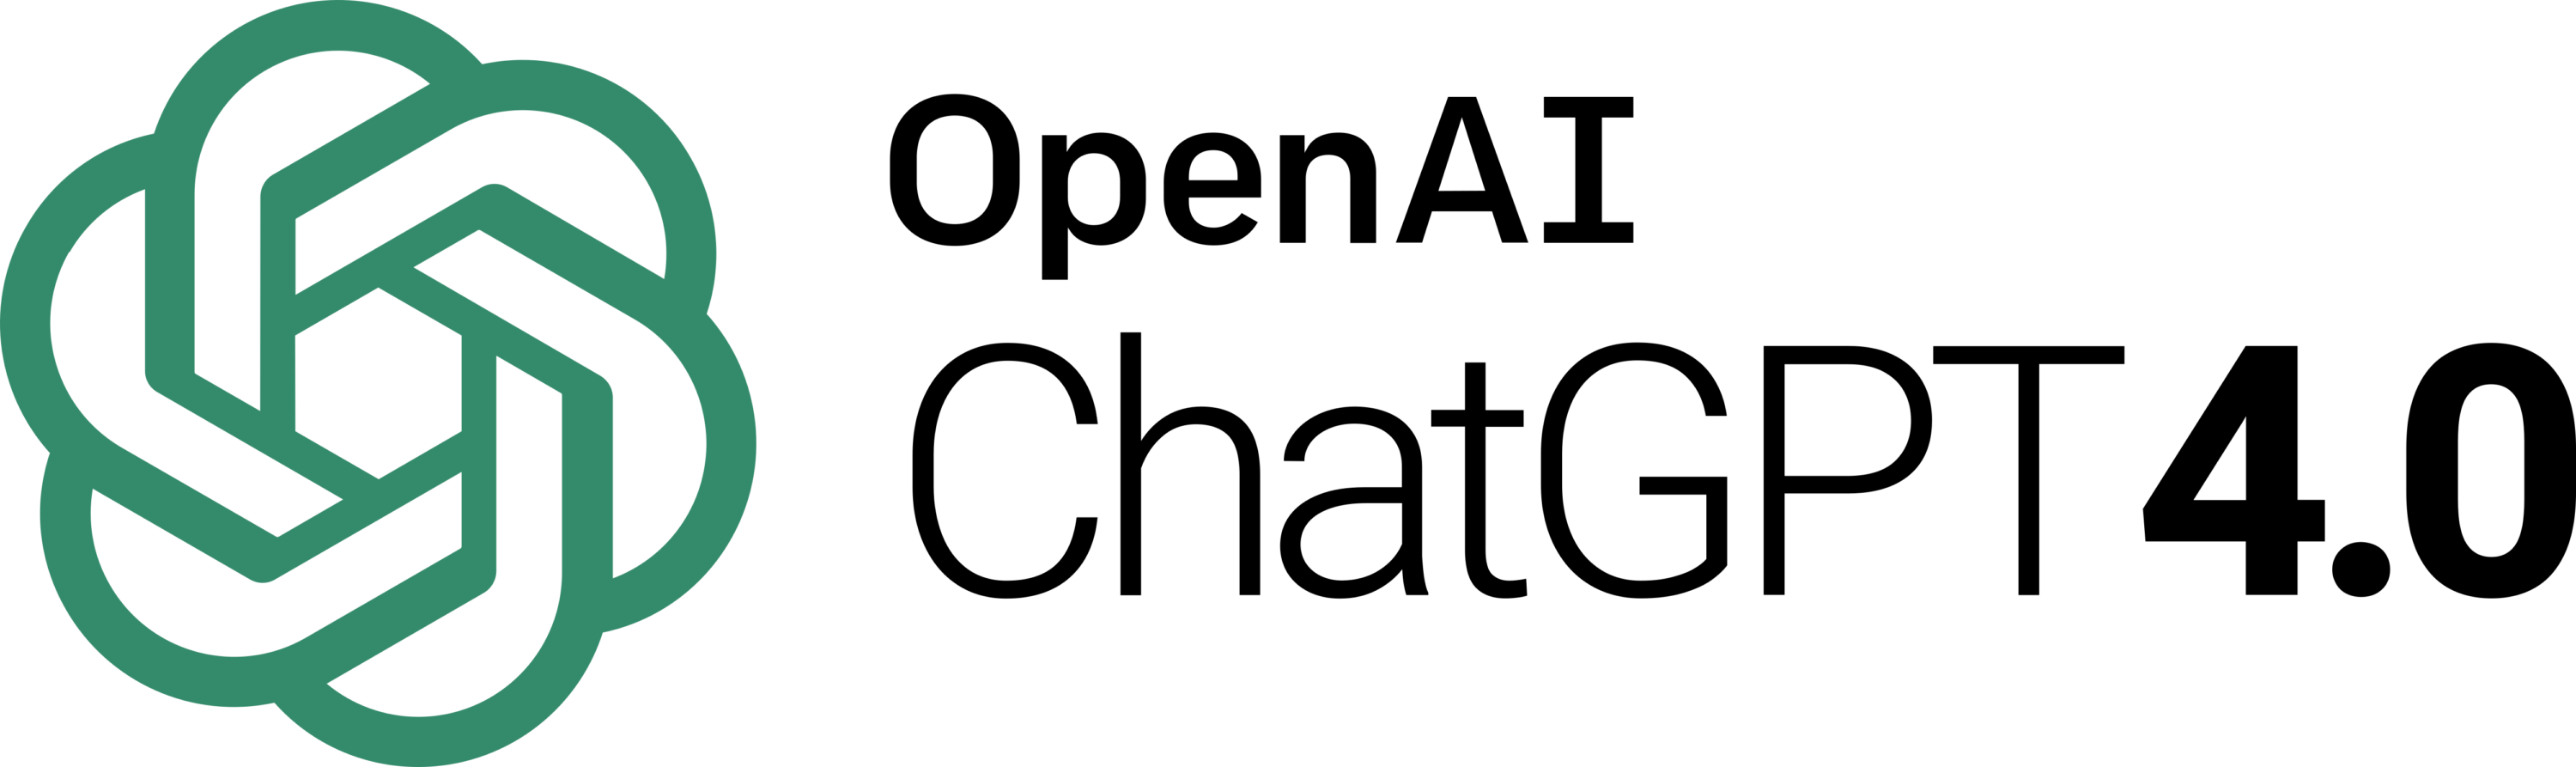 OpenAI ChatGPT 4.0 Logo